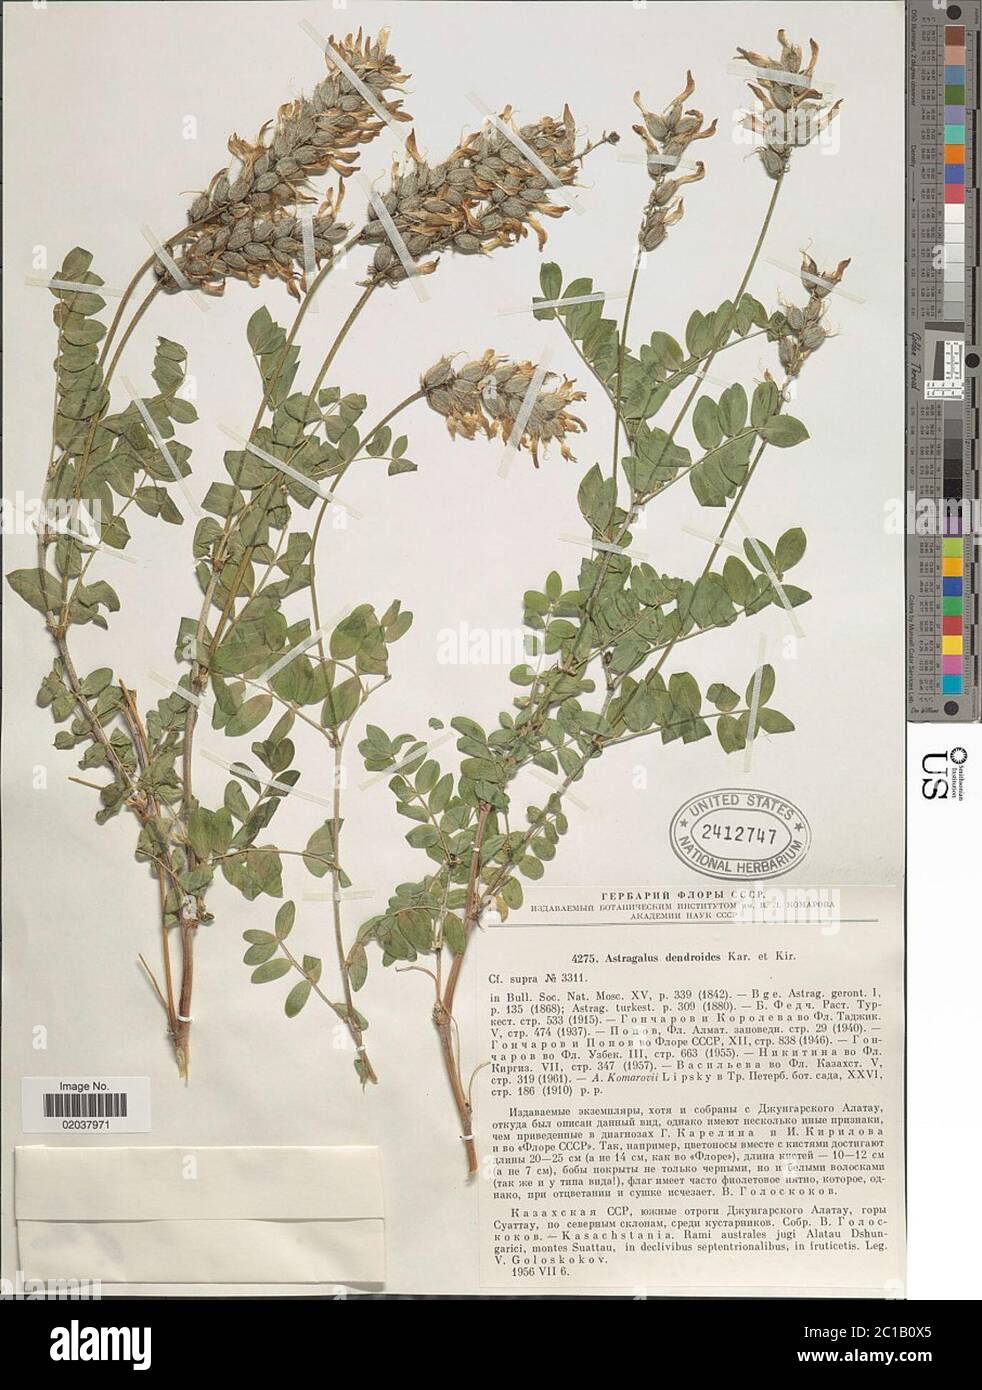 Astragalus dendroides Kar Kir Astragalus dendroides Kar Kir. Stock Photo